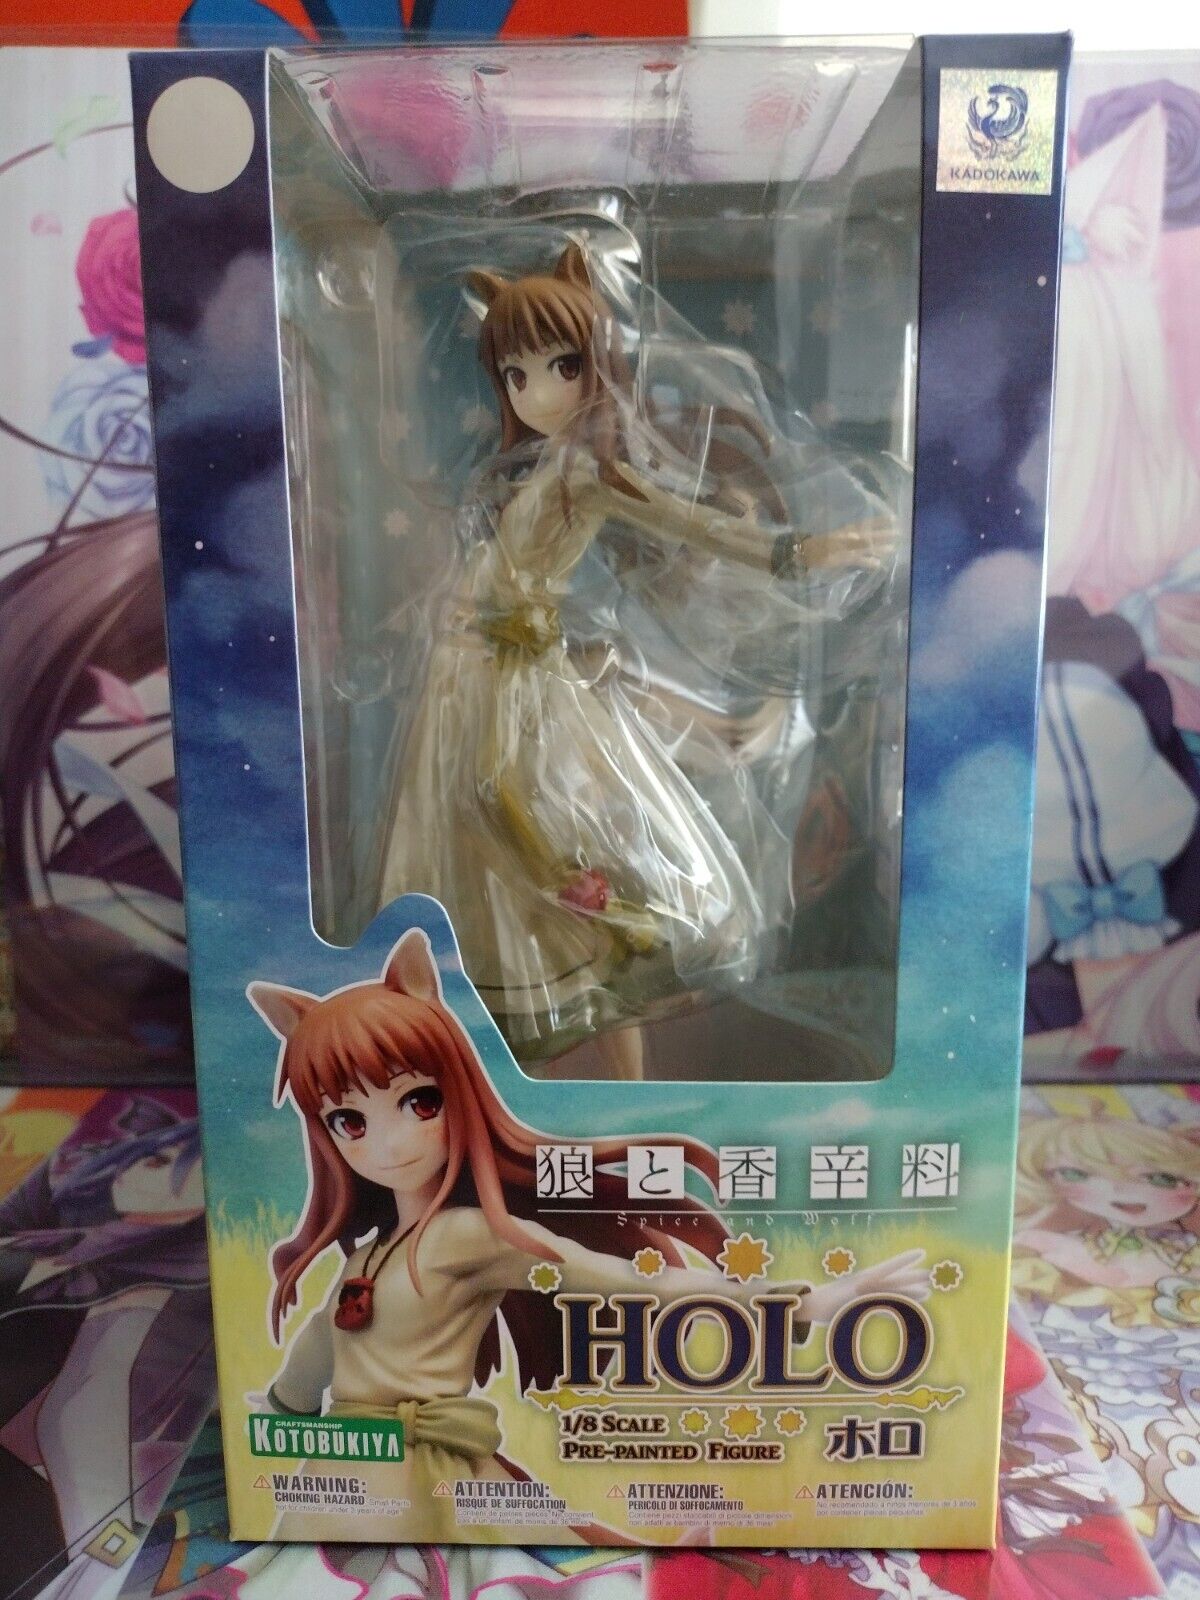 Kotobukiya Spice and Wolf Holo Renewal package version 1/8 Scale figure